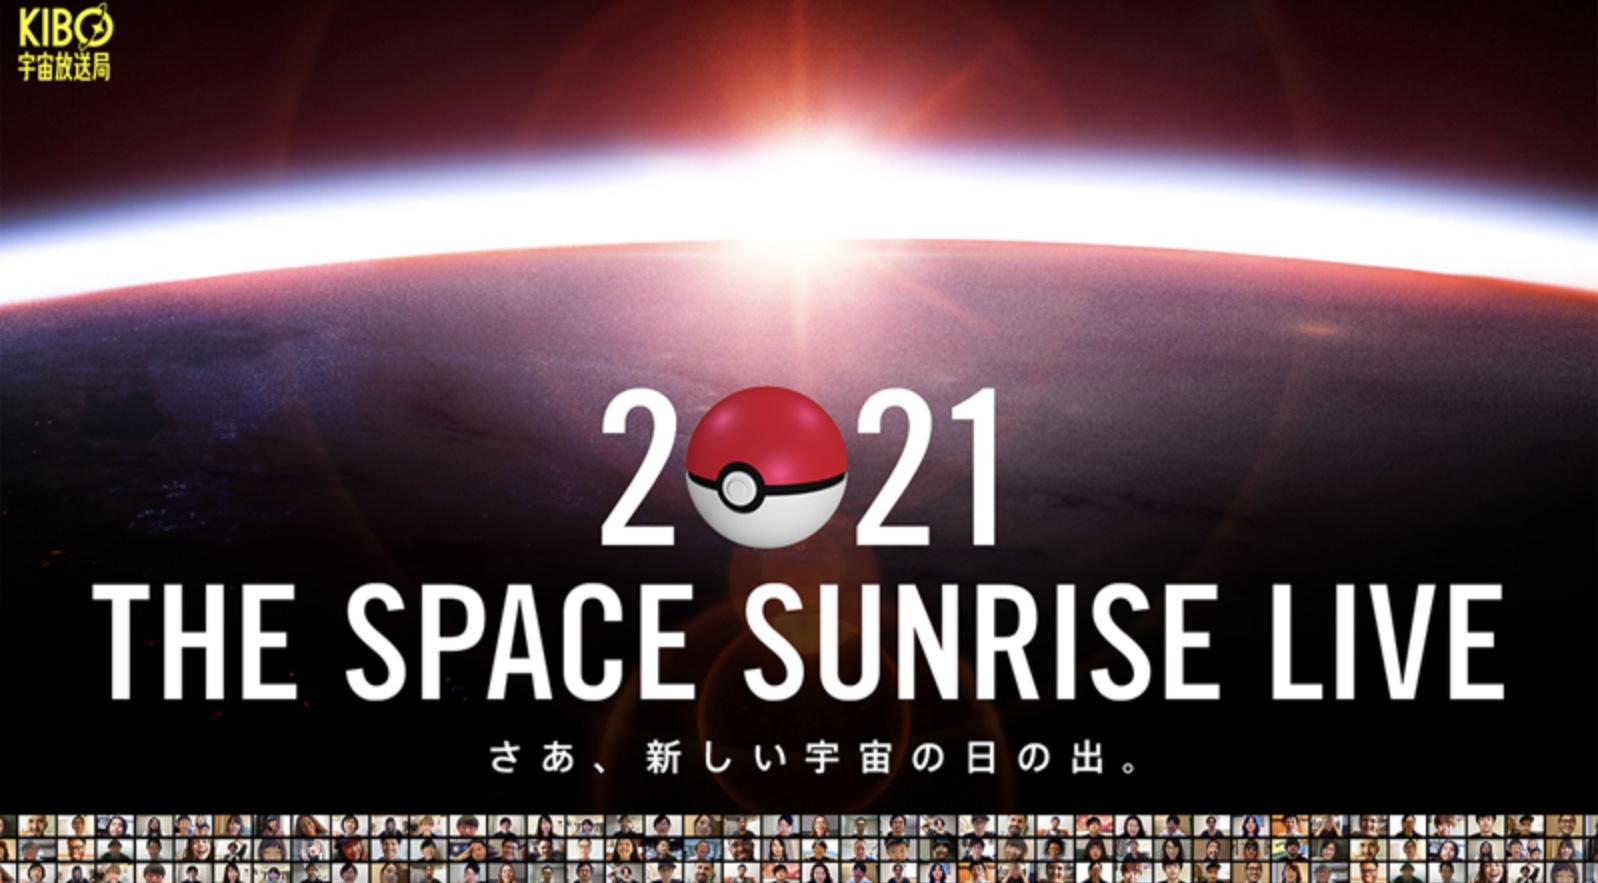 Promotion for Pokemon 2021 Space Sunrise live event.